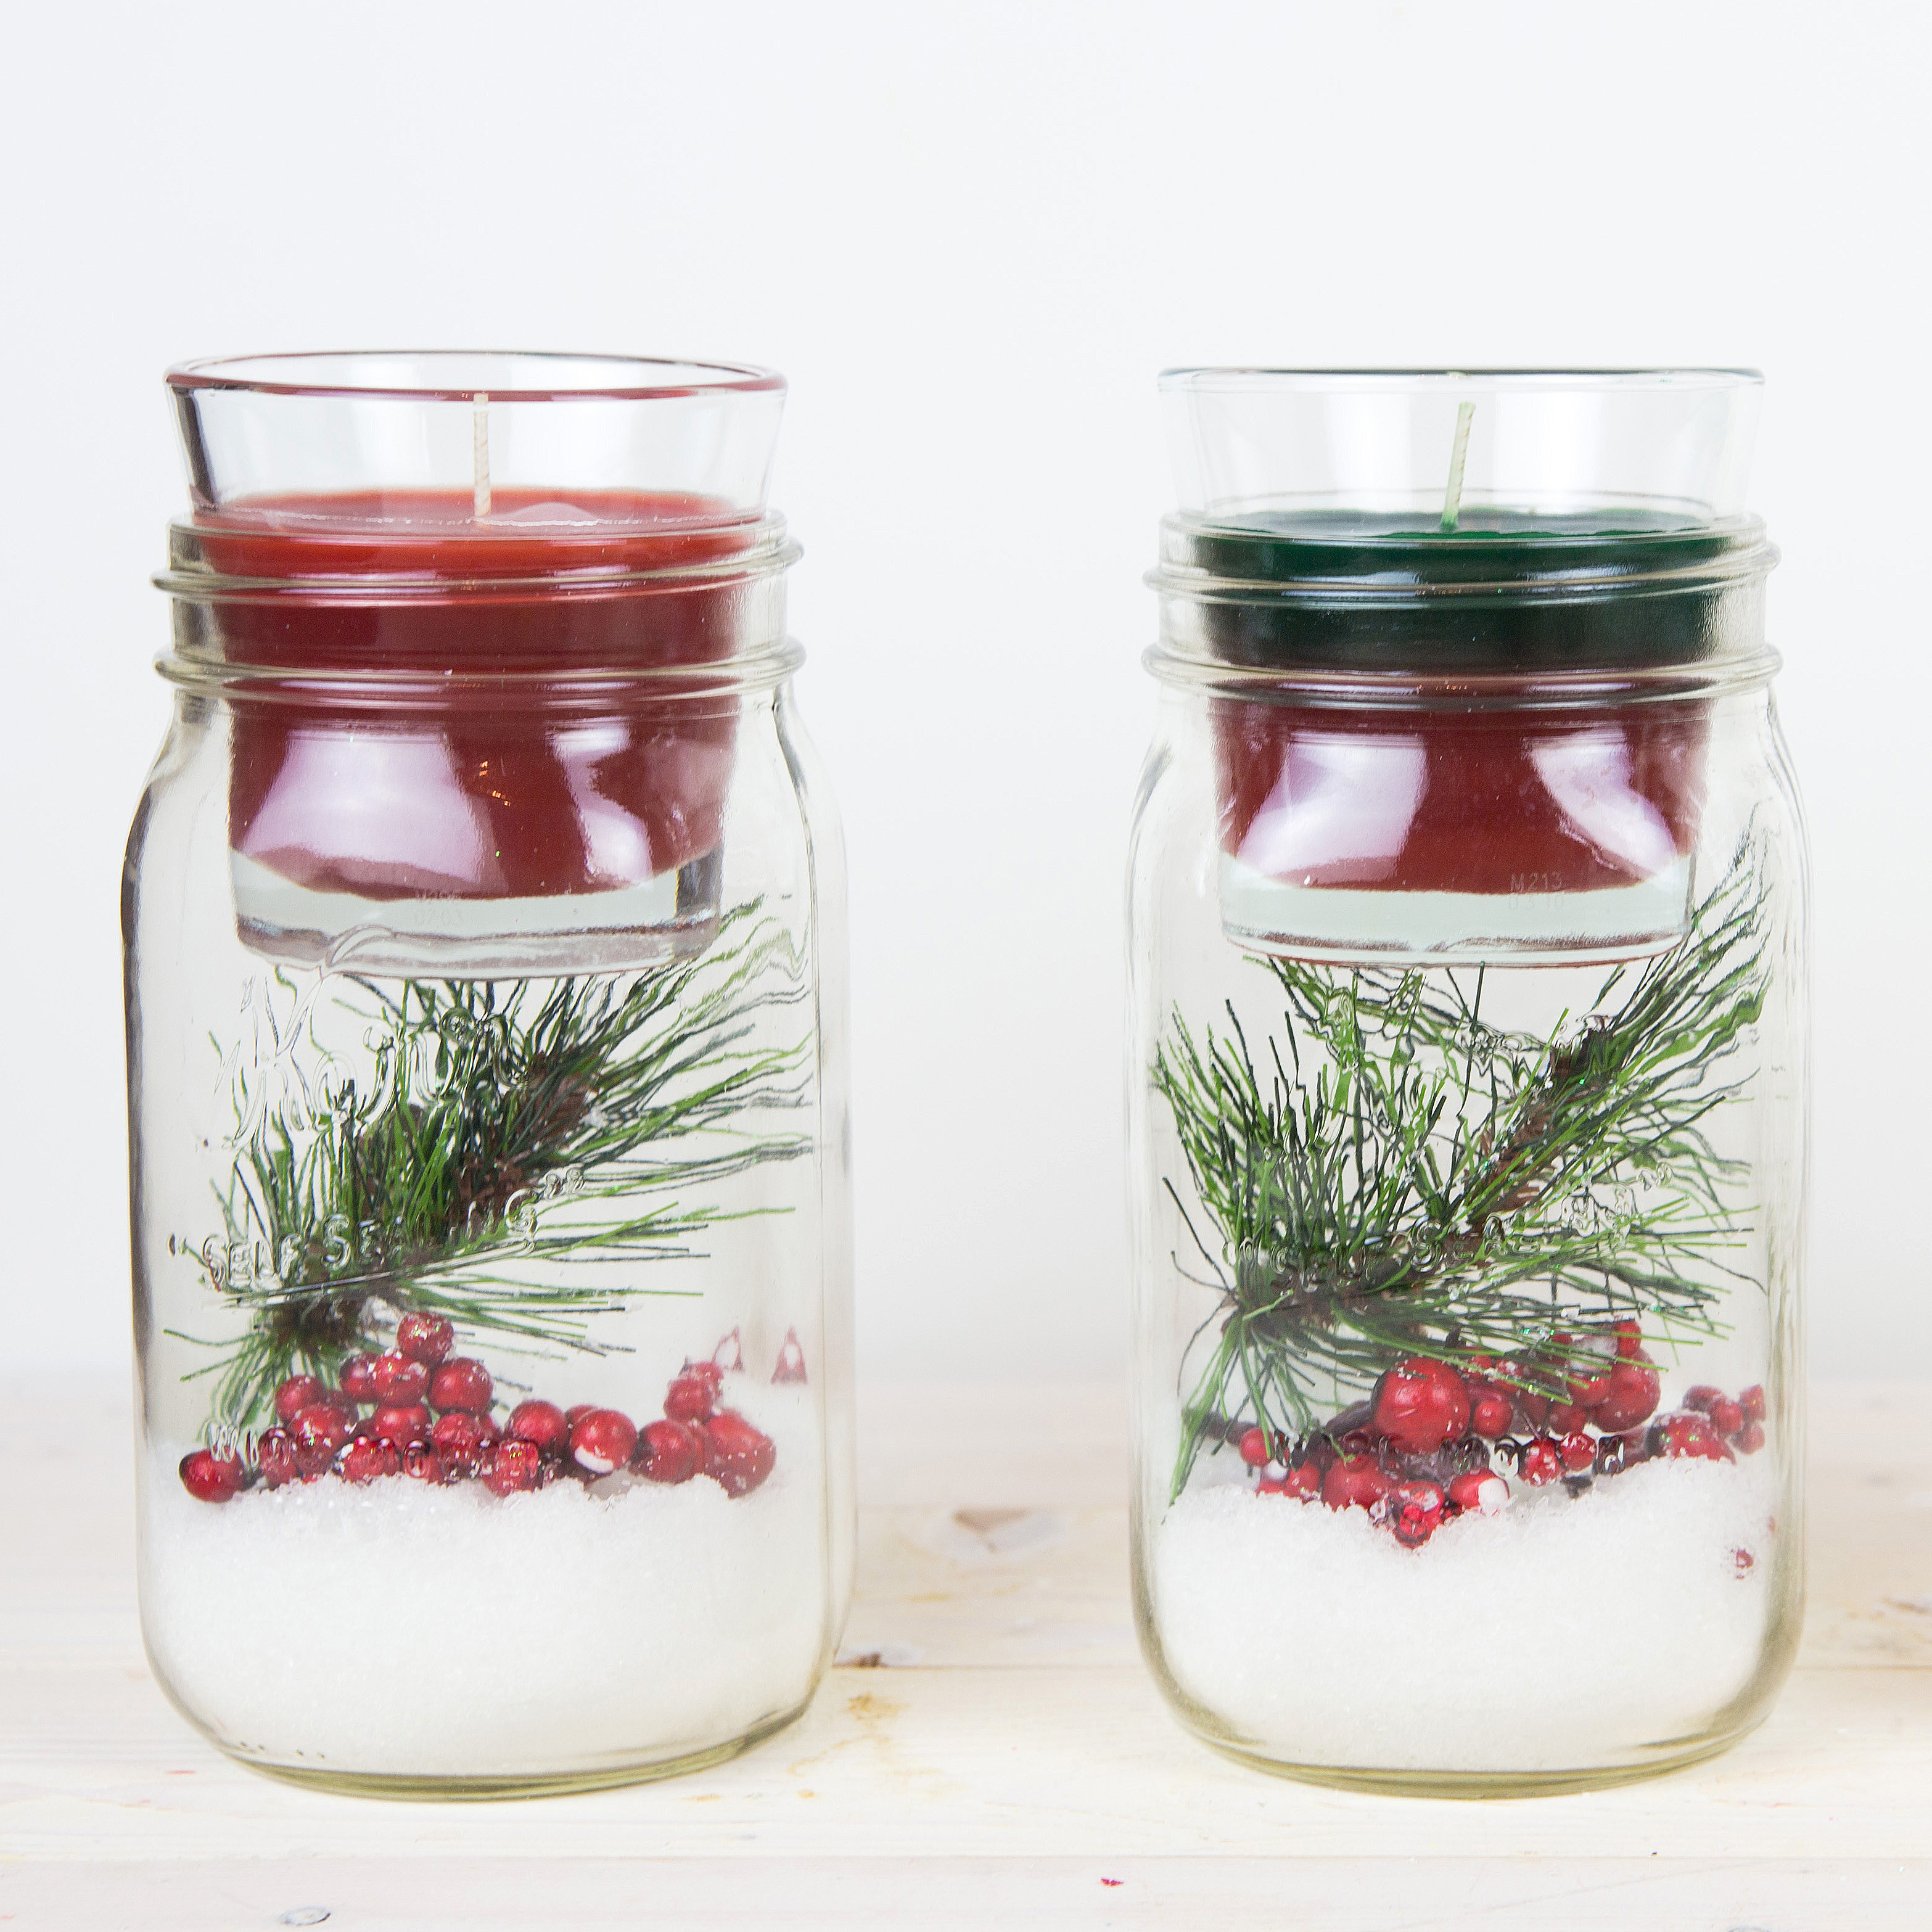 Best ideas about DIY Christmas Mason Jars
. Save or Pin DIY Christmas Mason Jar Candle Holder Now.